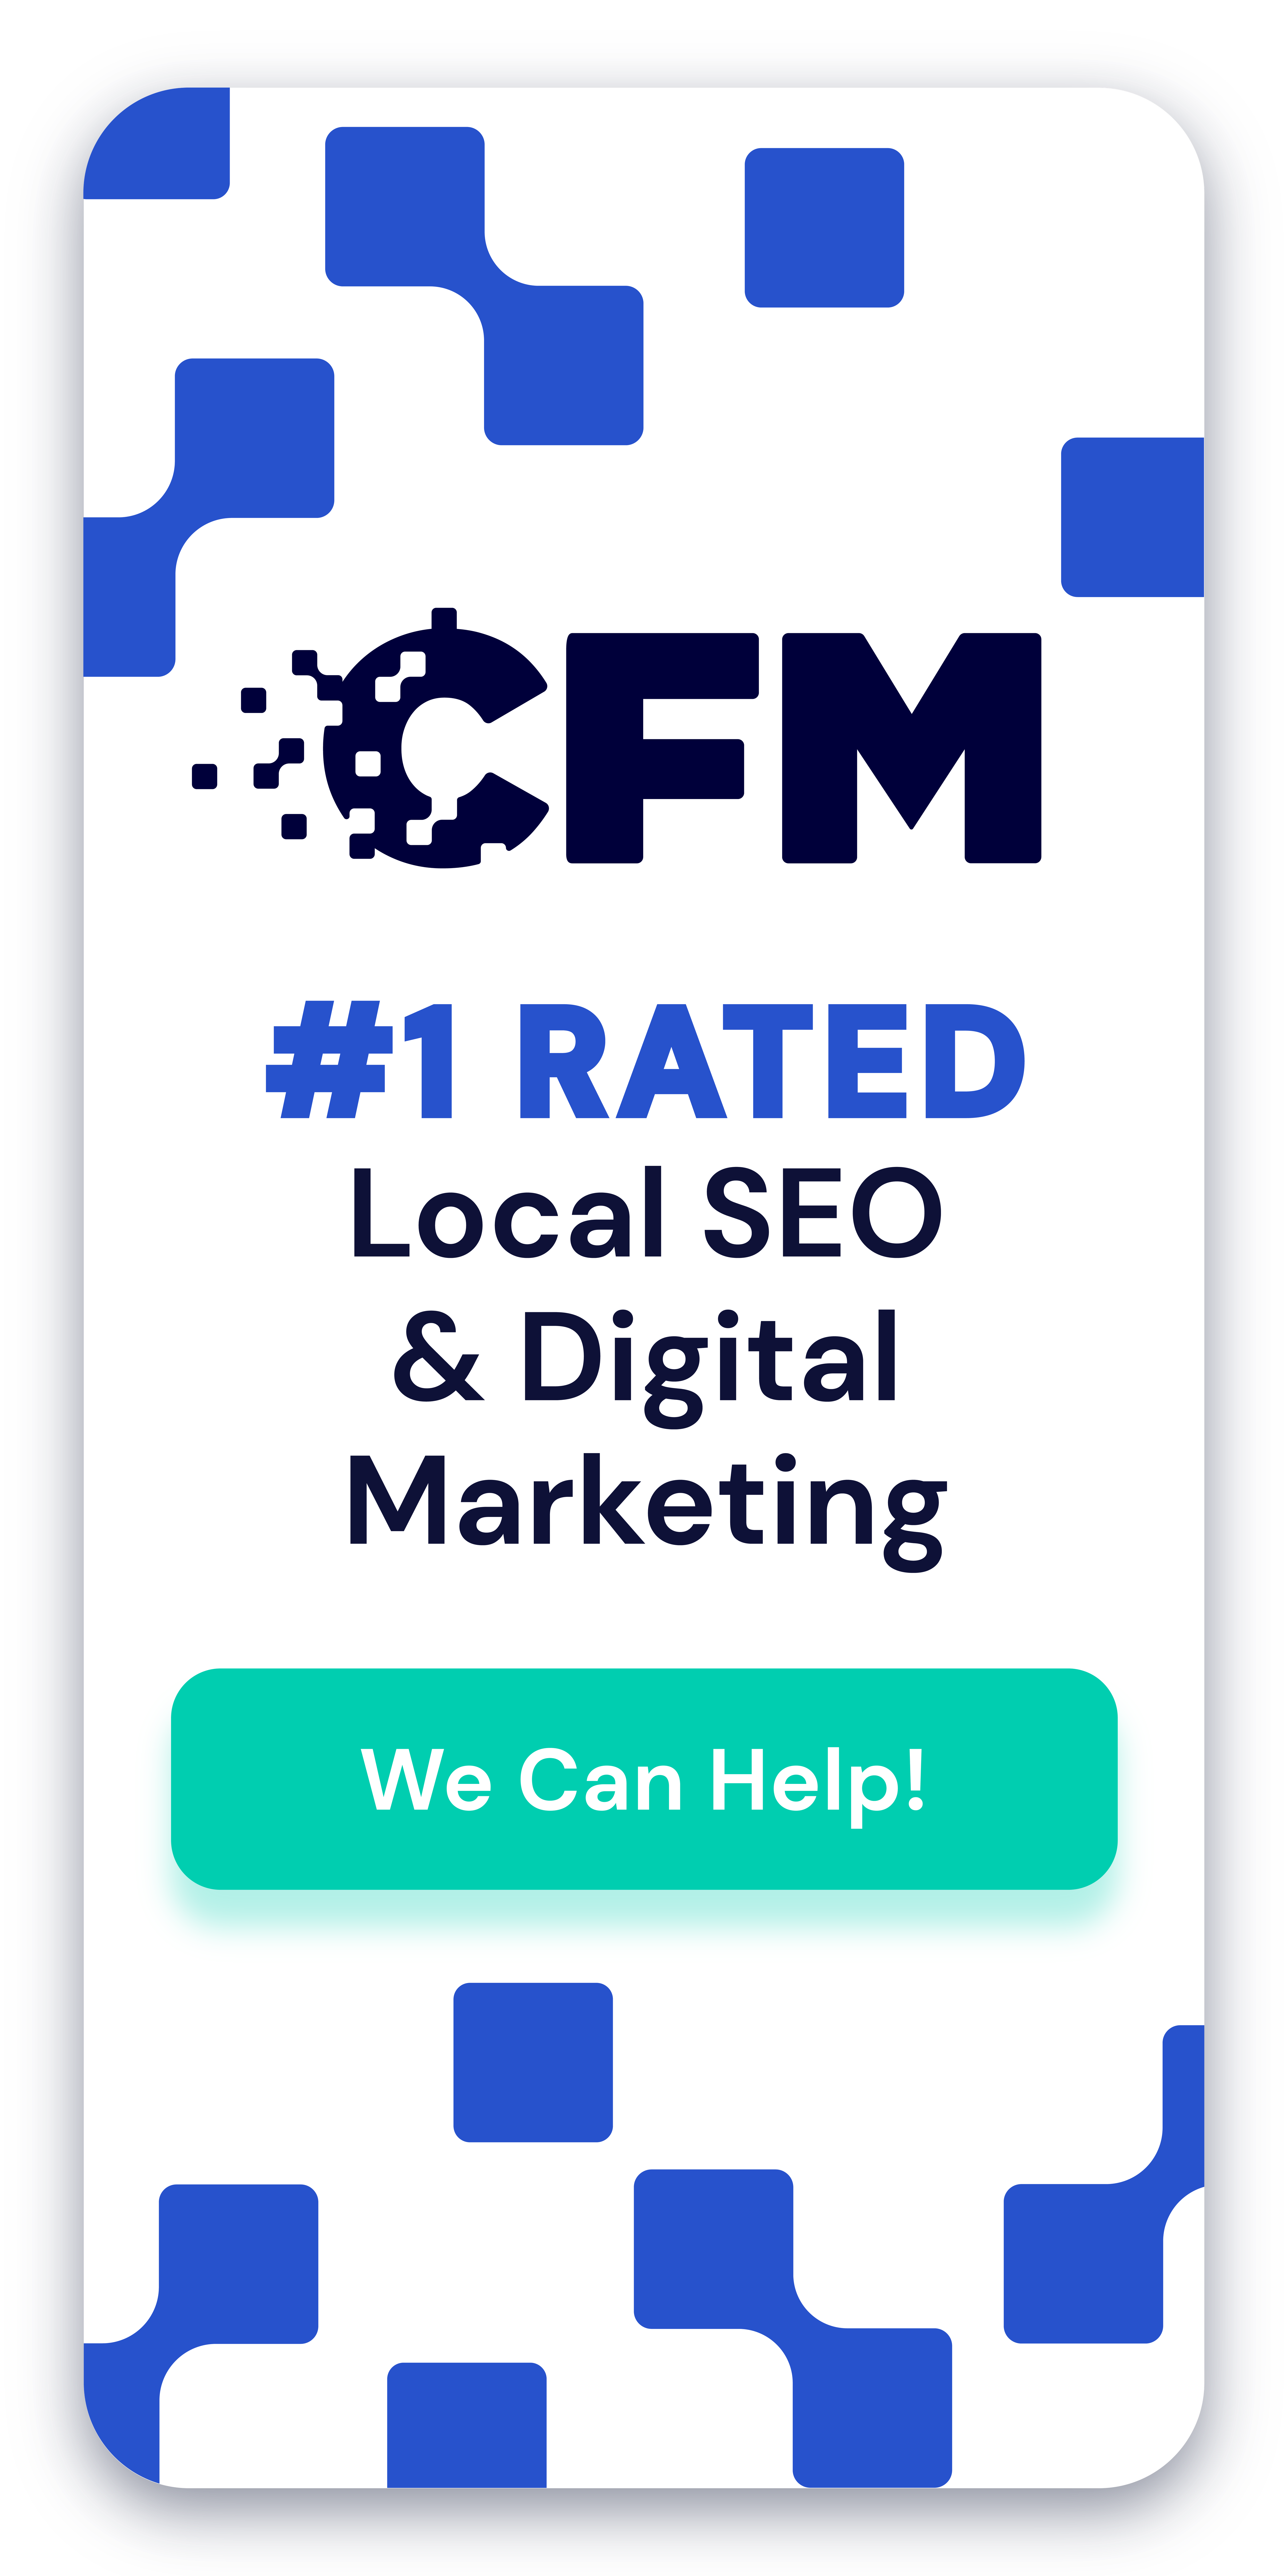 Top SEO & Digital Marketing in Franklin & Nashville TN by CFM banner